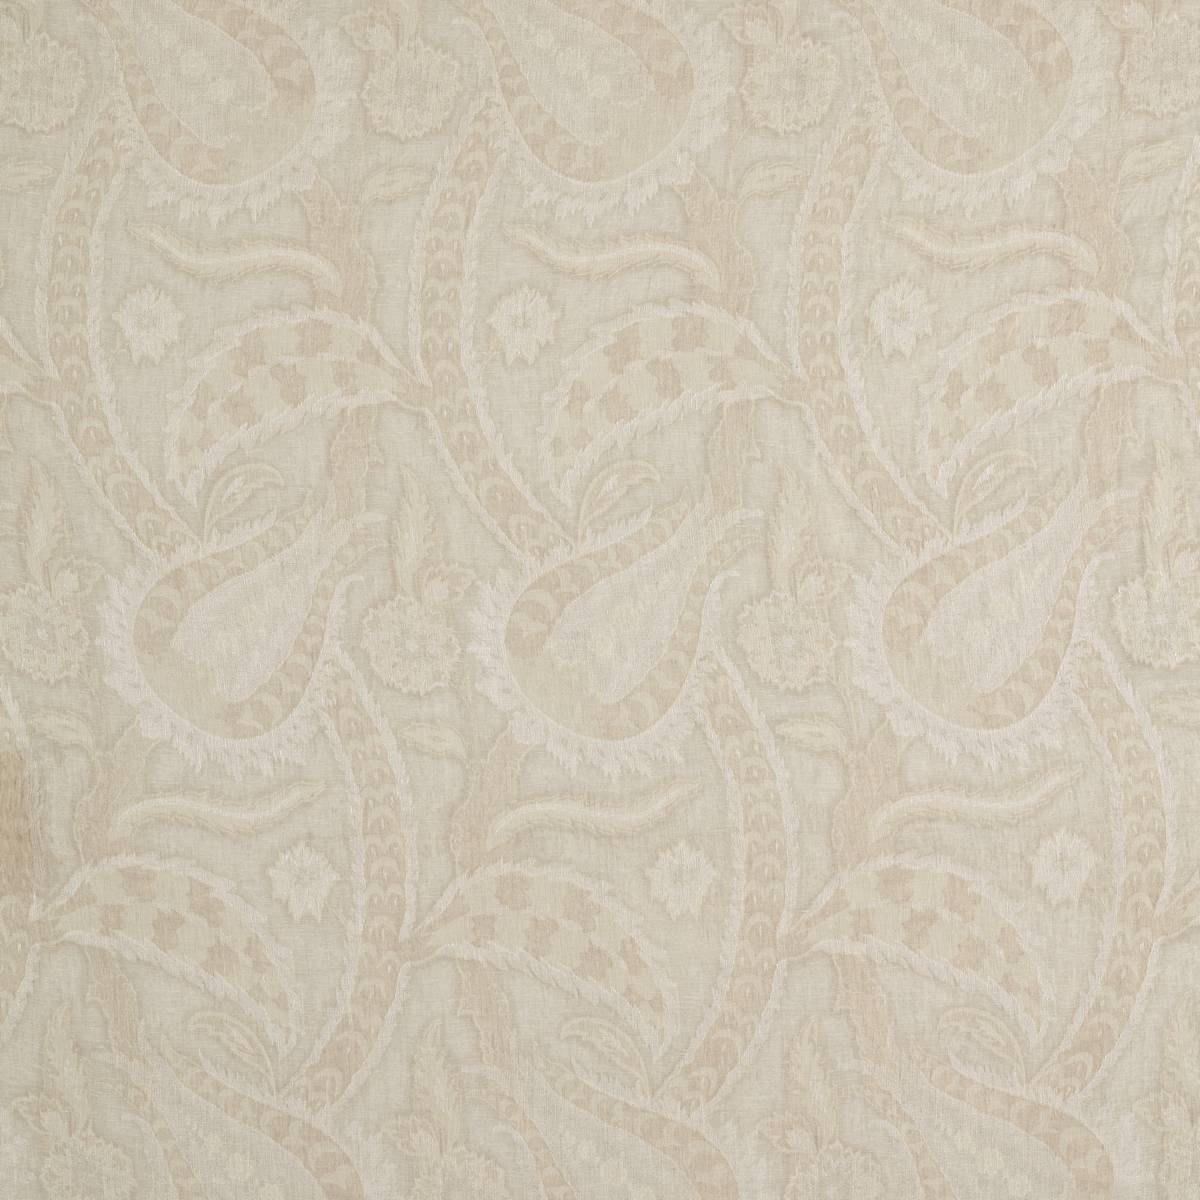 Oberon Linen Fabric by Zoffany